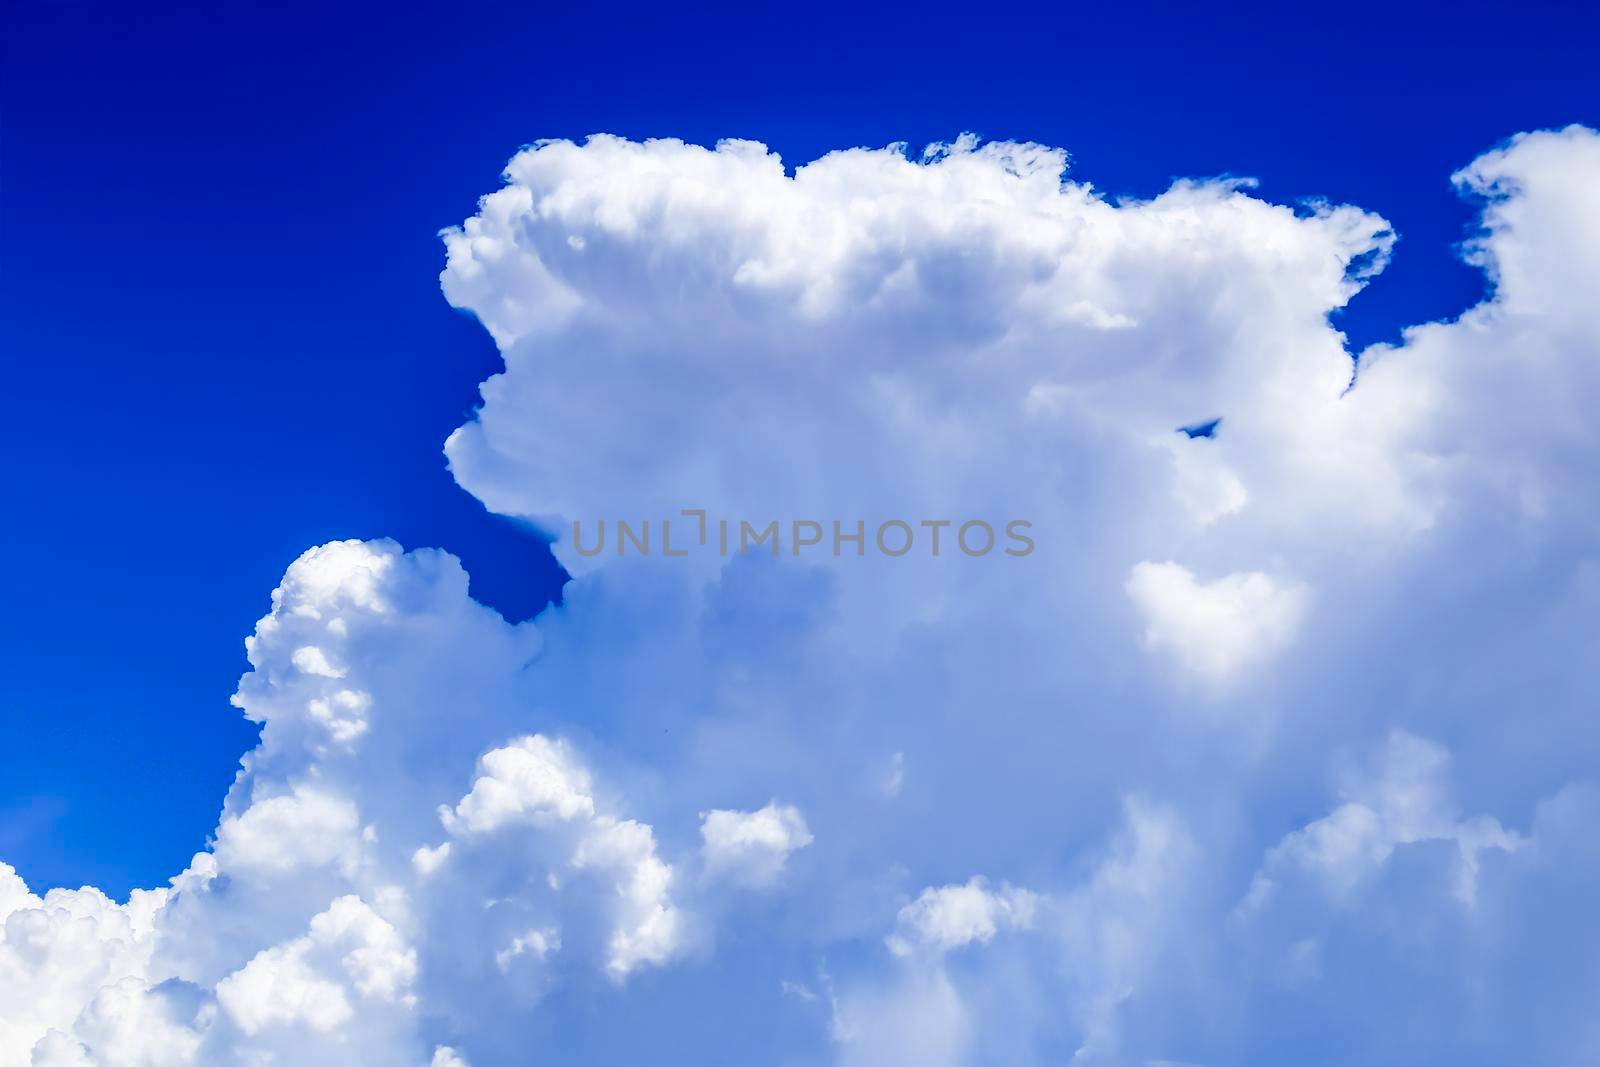 Sky with Cumulonimbus clouds in Spain by soniabonet